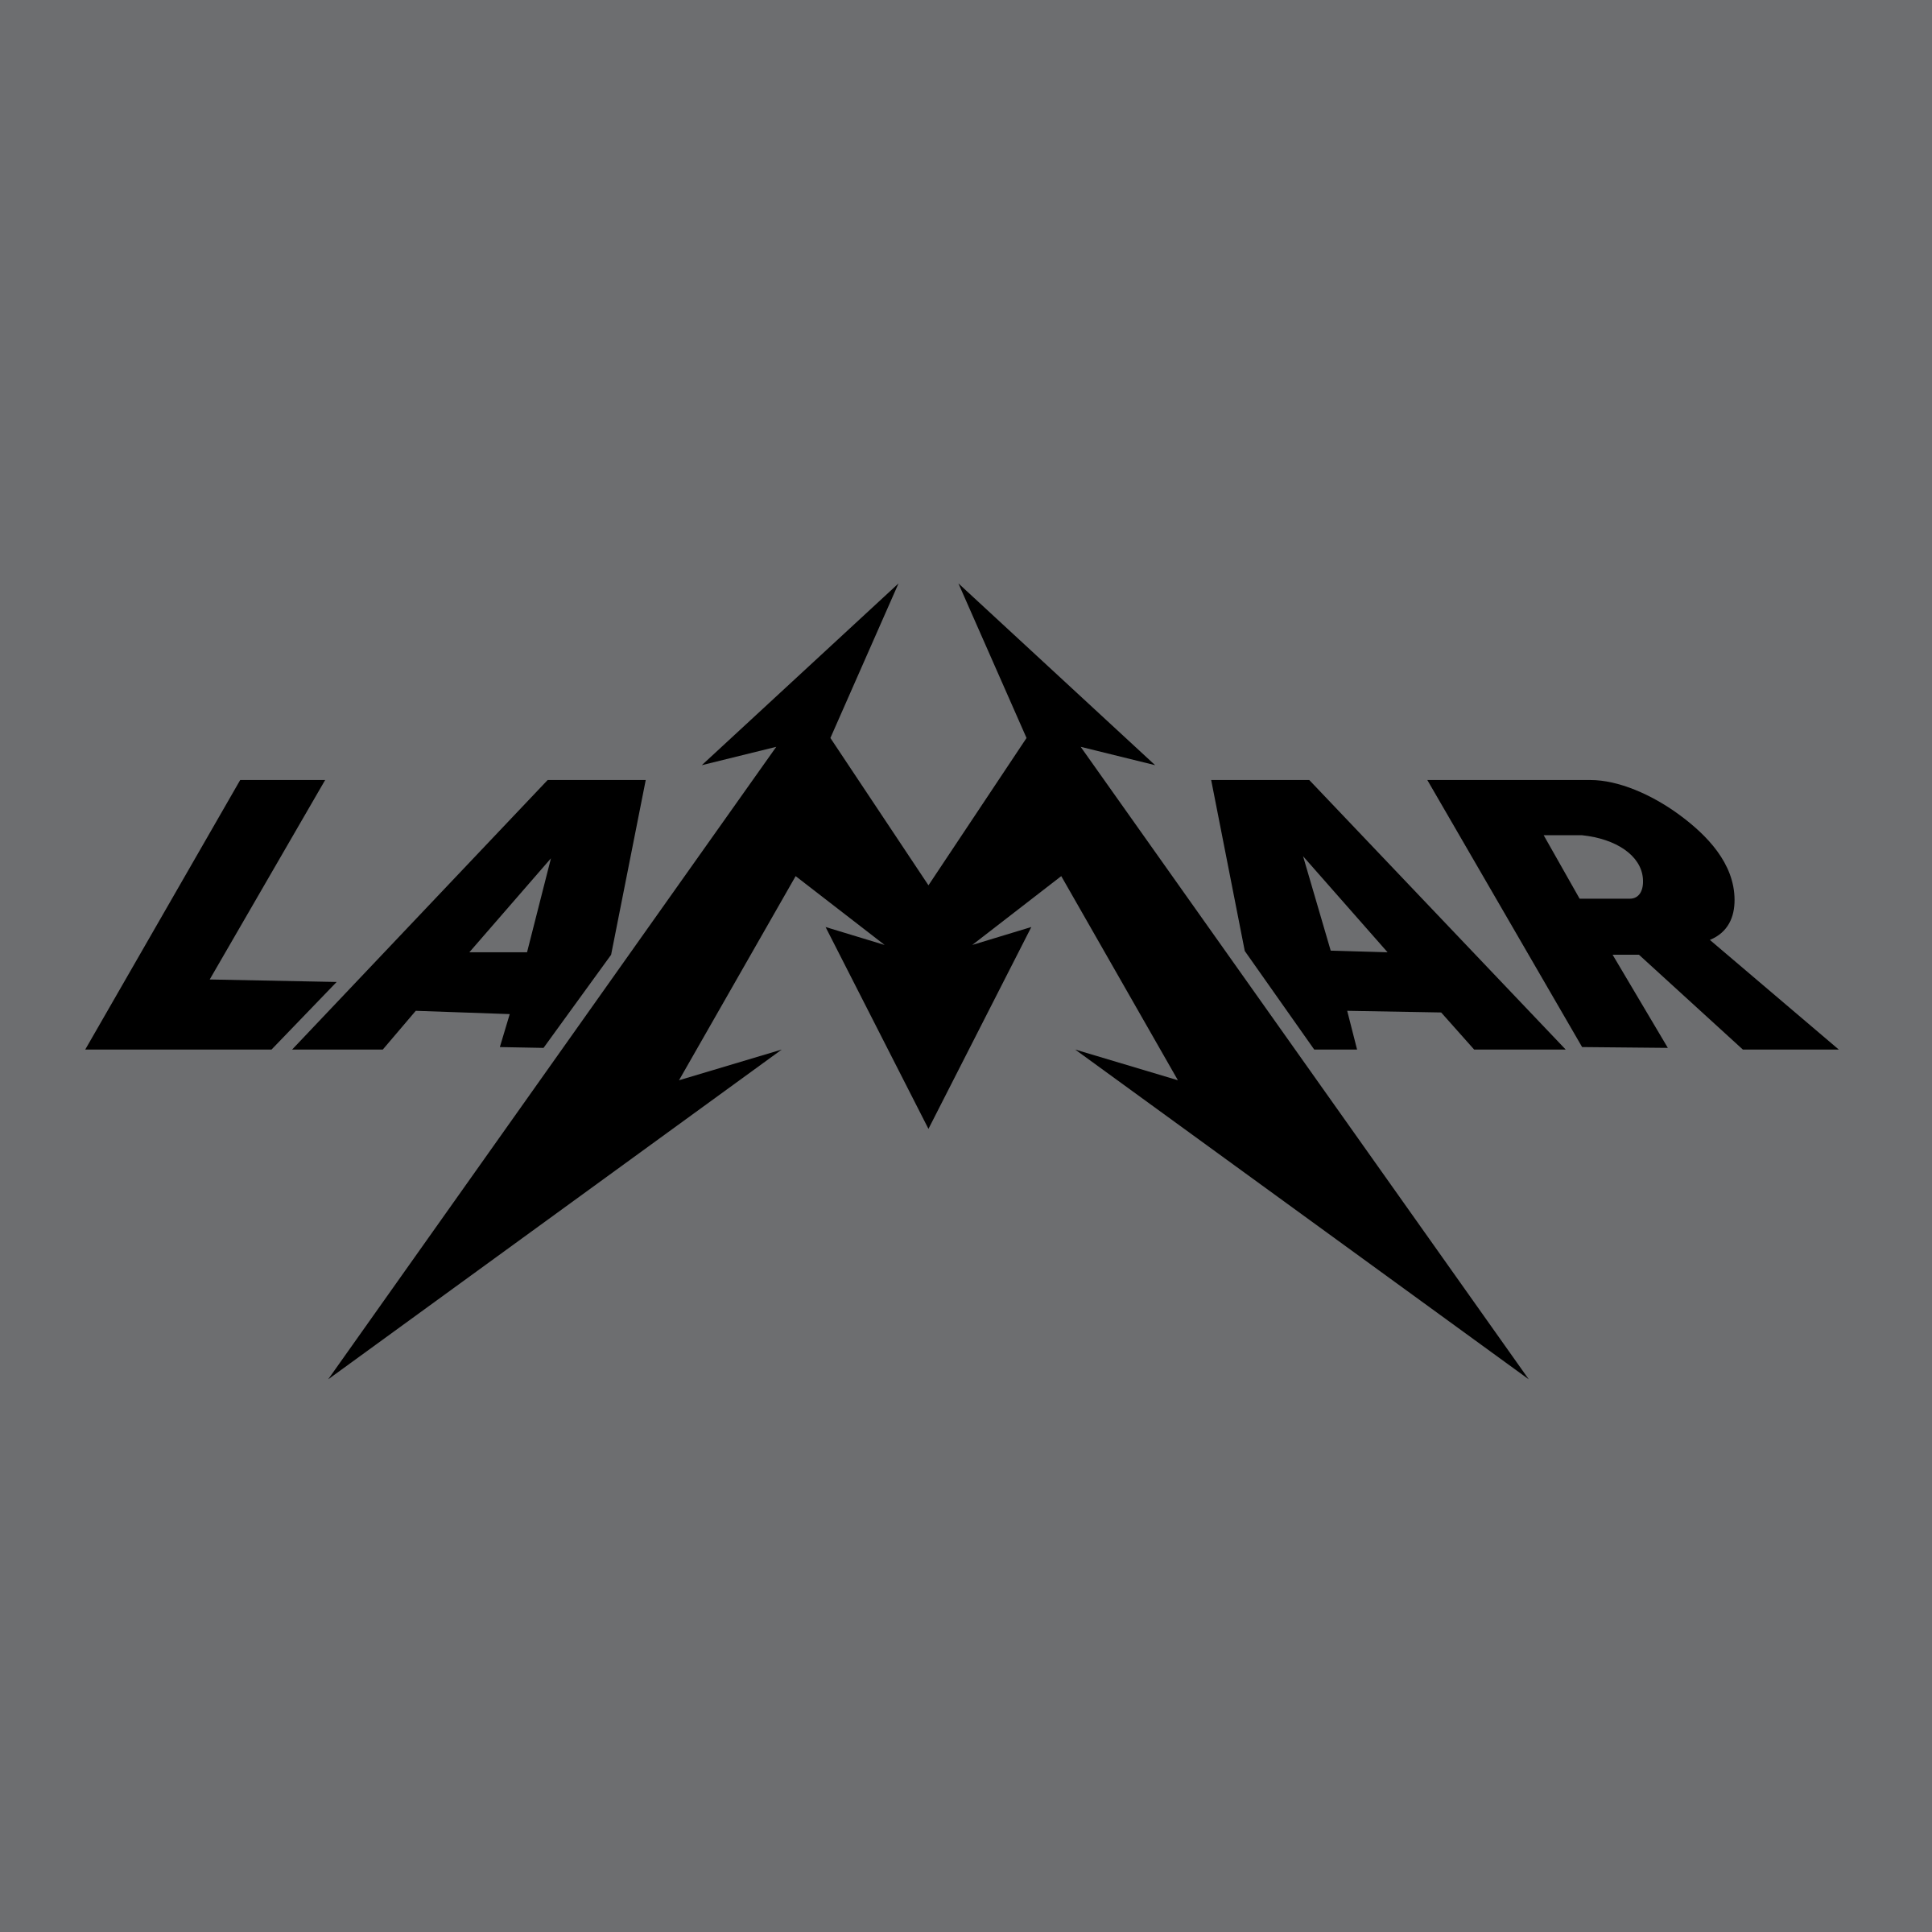 Lamar Logo - Lamar Logo PNG Transparent & SVG Vector - Freebie Supply